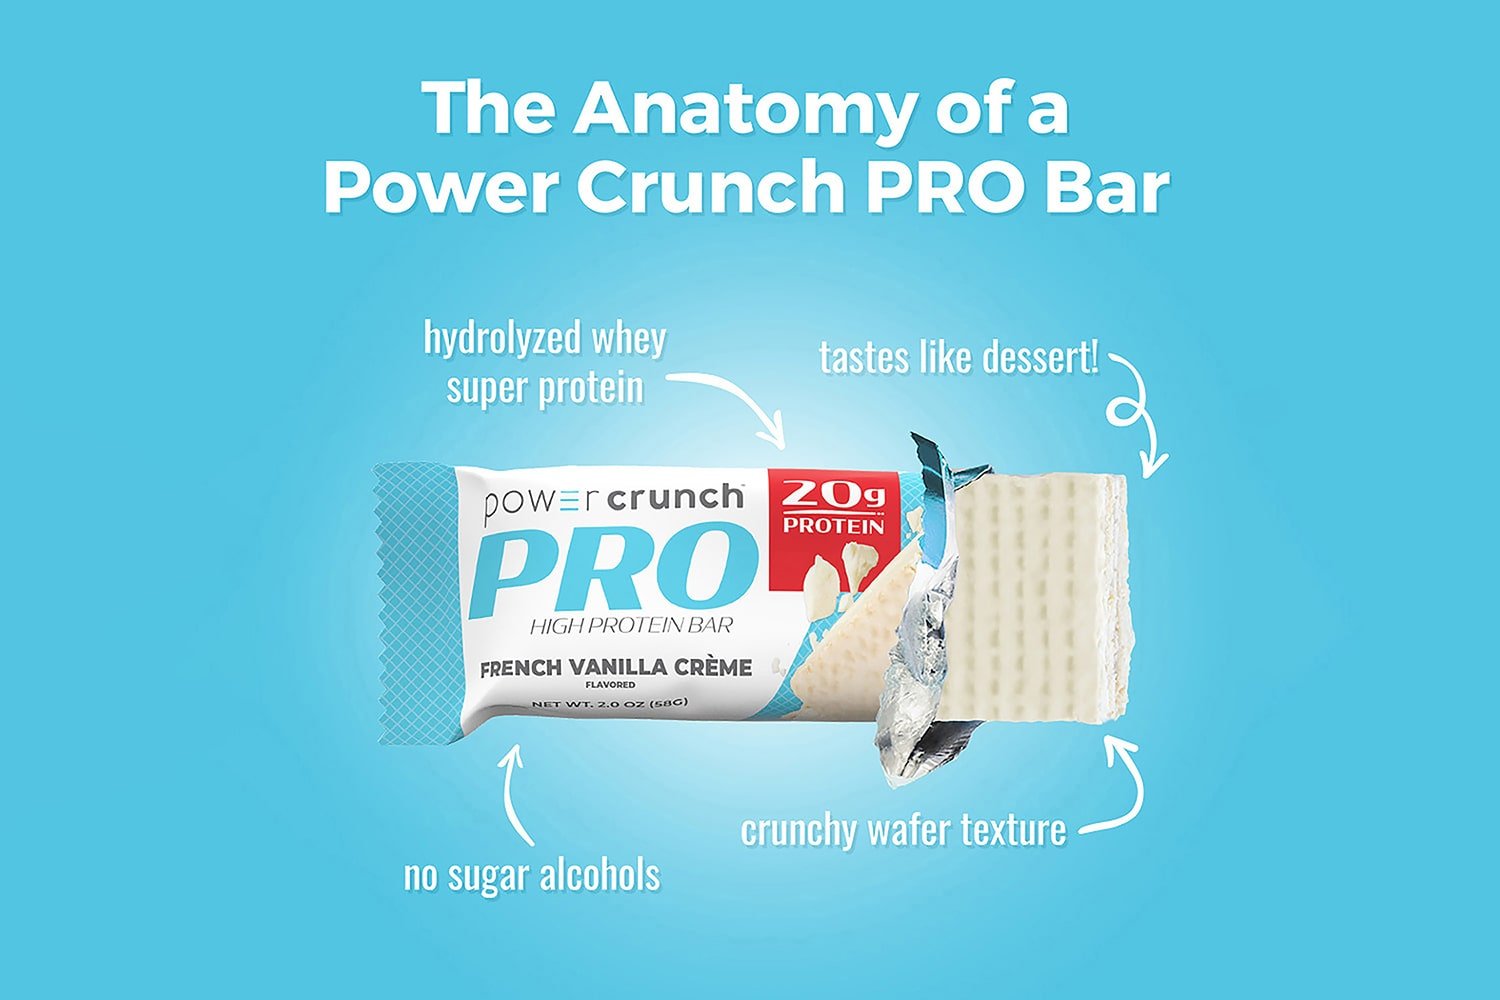 Anatomy of a Power Crunch PRO French Vanilla bar with hydrolyzed whey protein, crunchy wafers